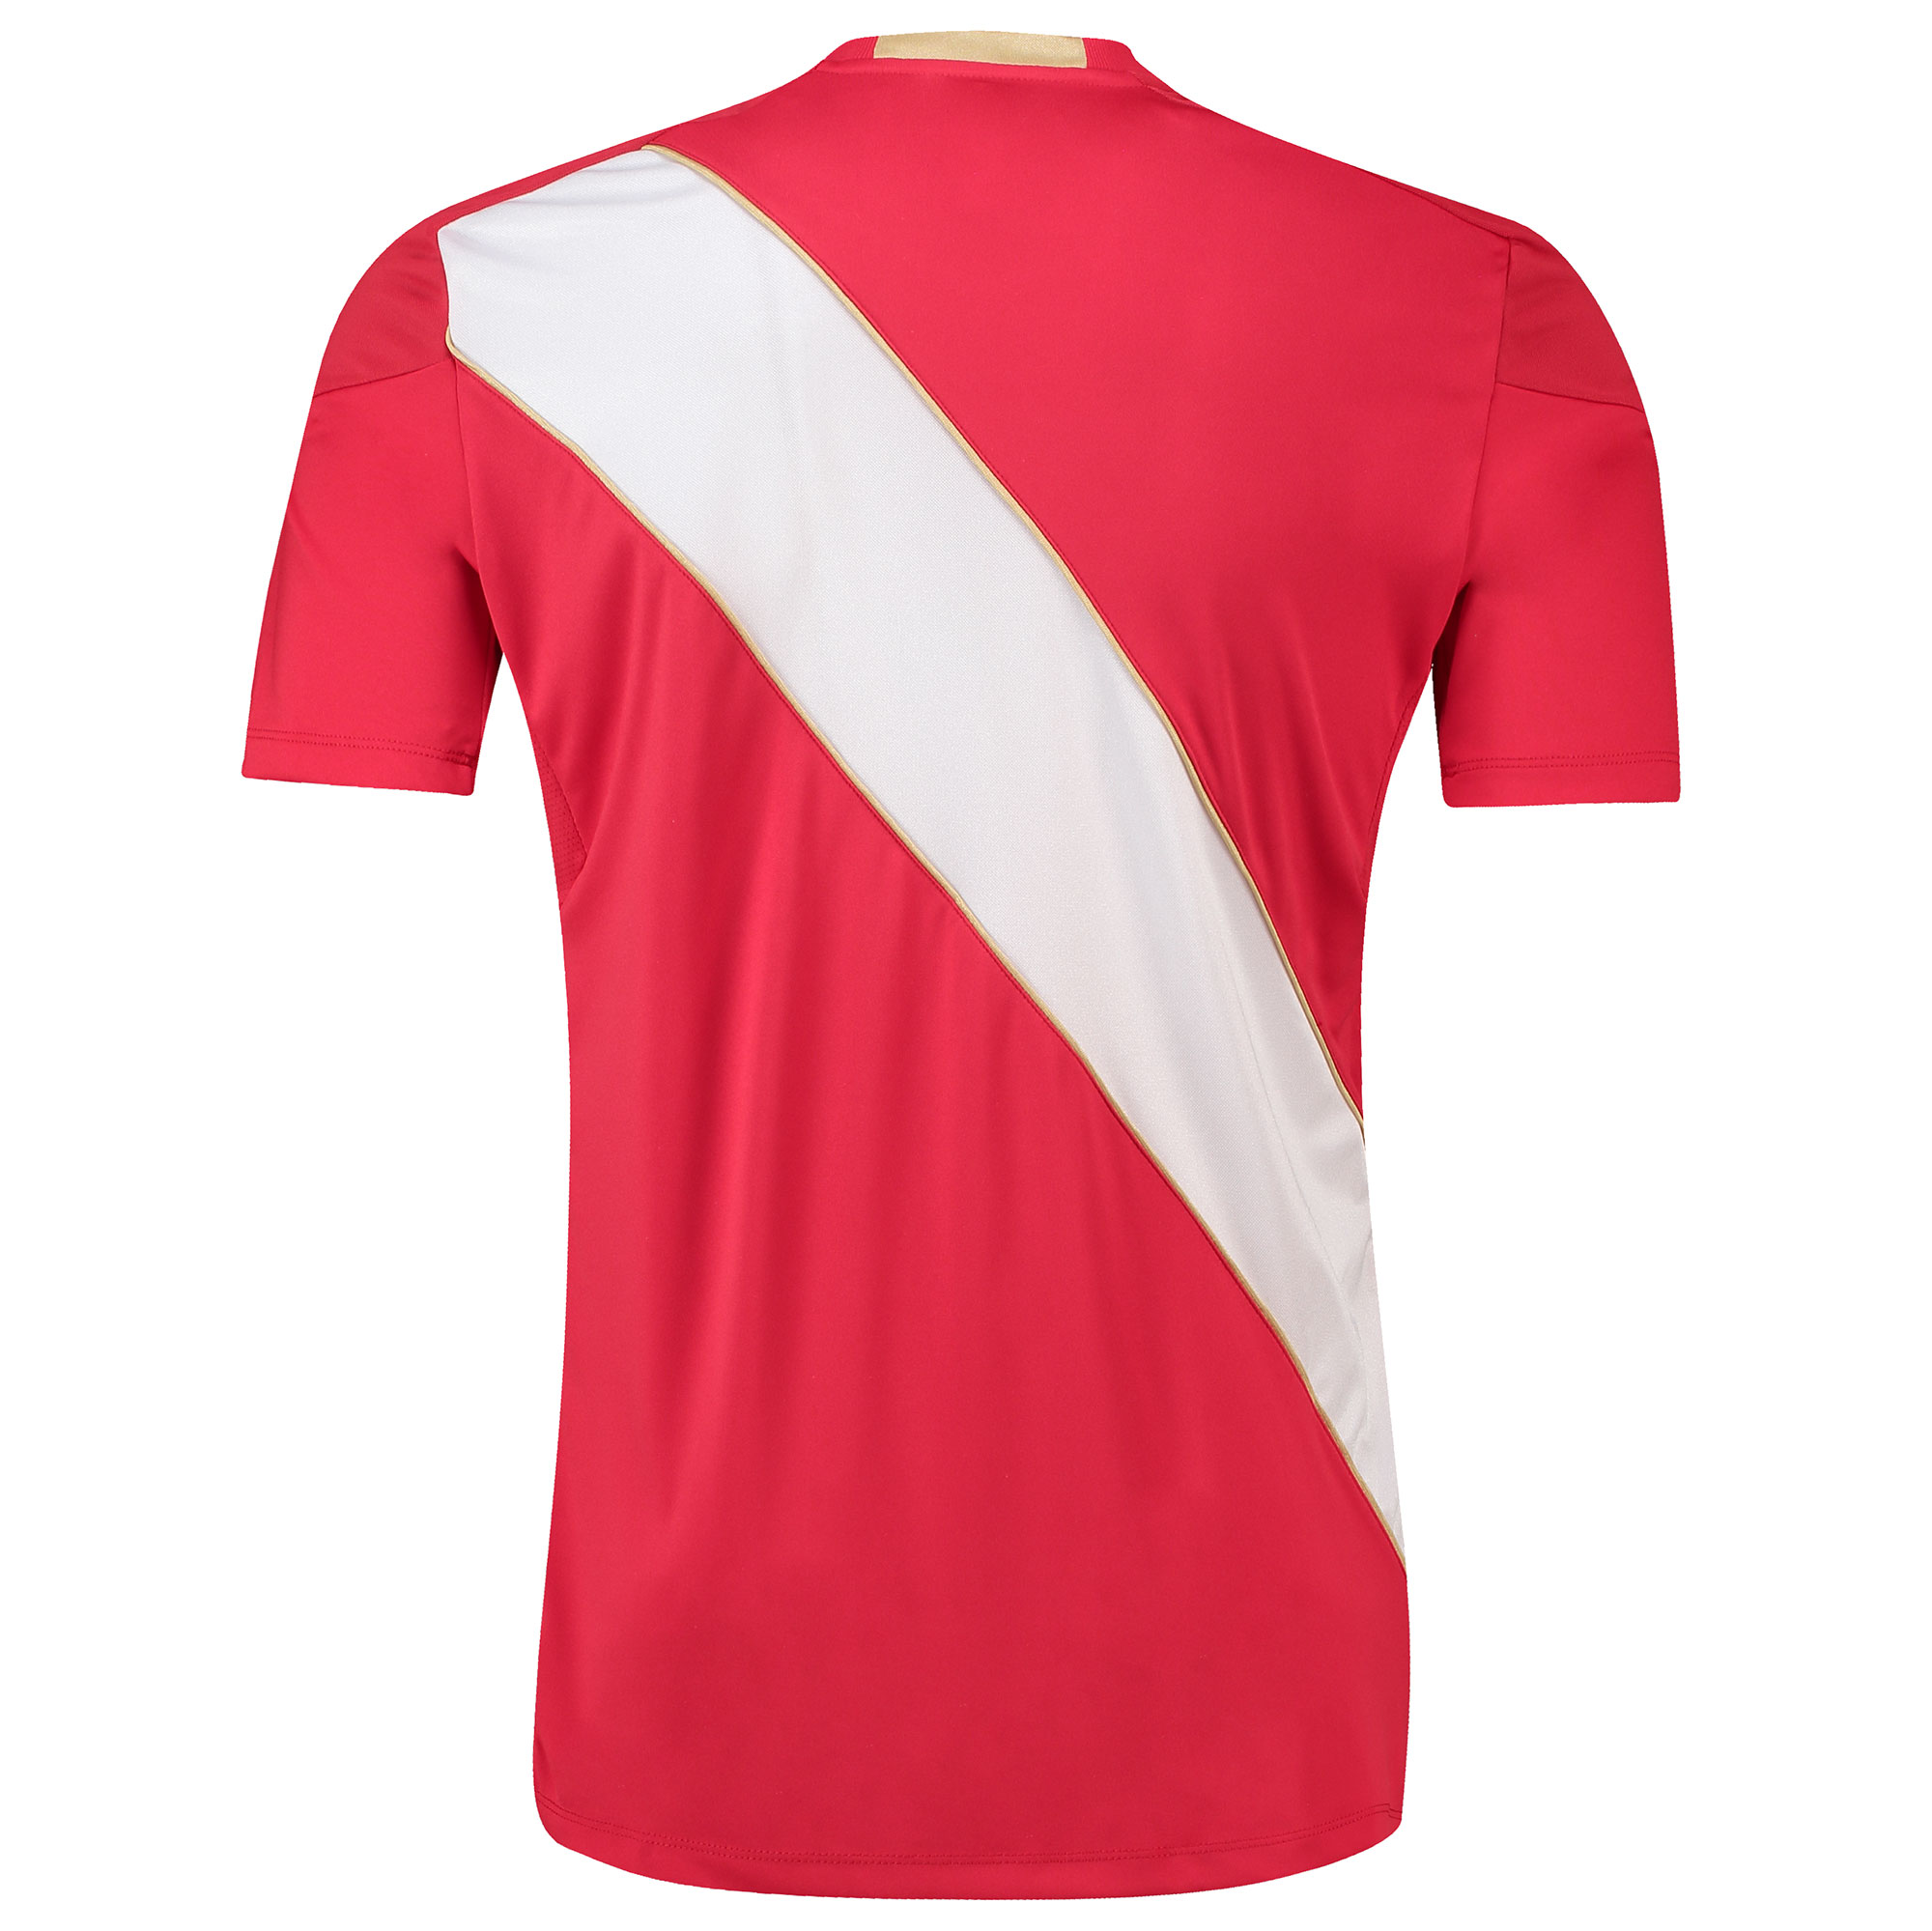 Peru 2018 World Cup Umbro Away Kit - 17/18 Kits - Football ...